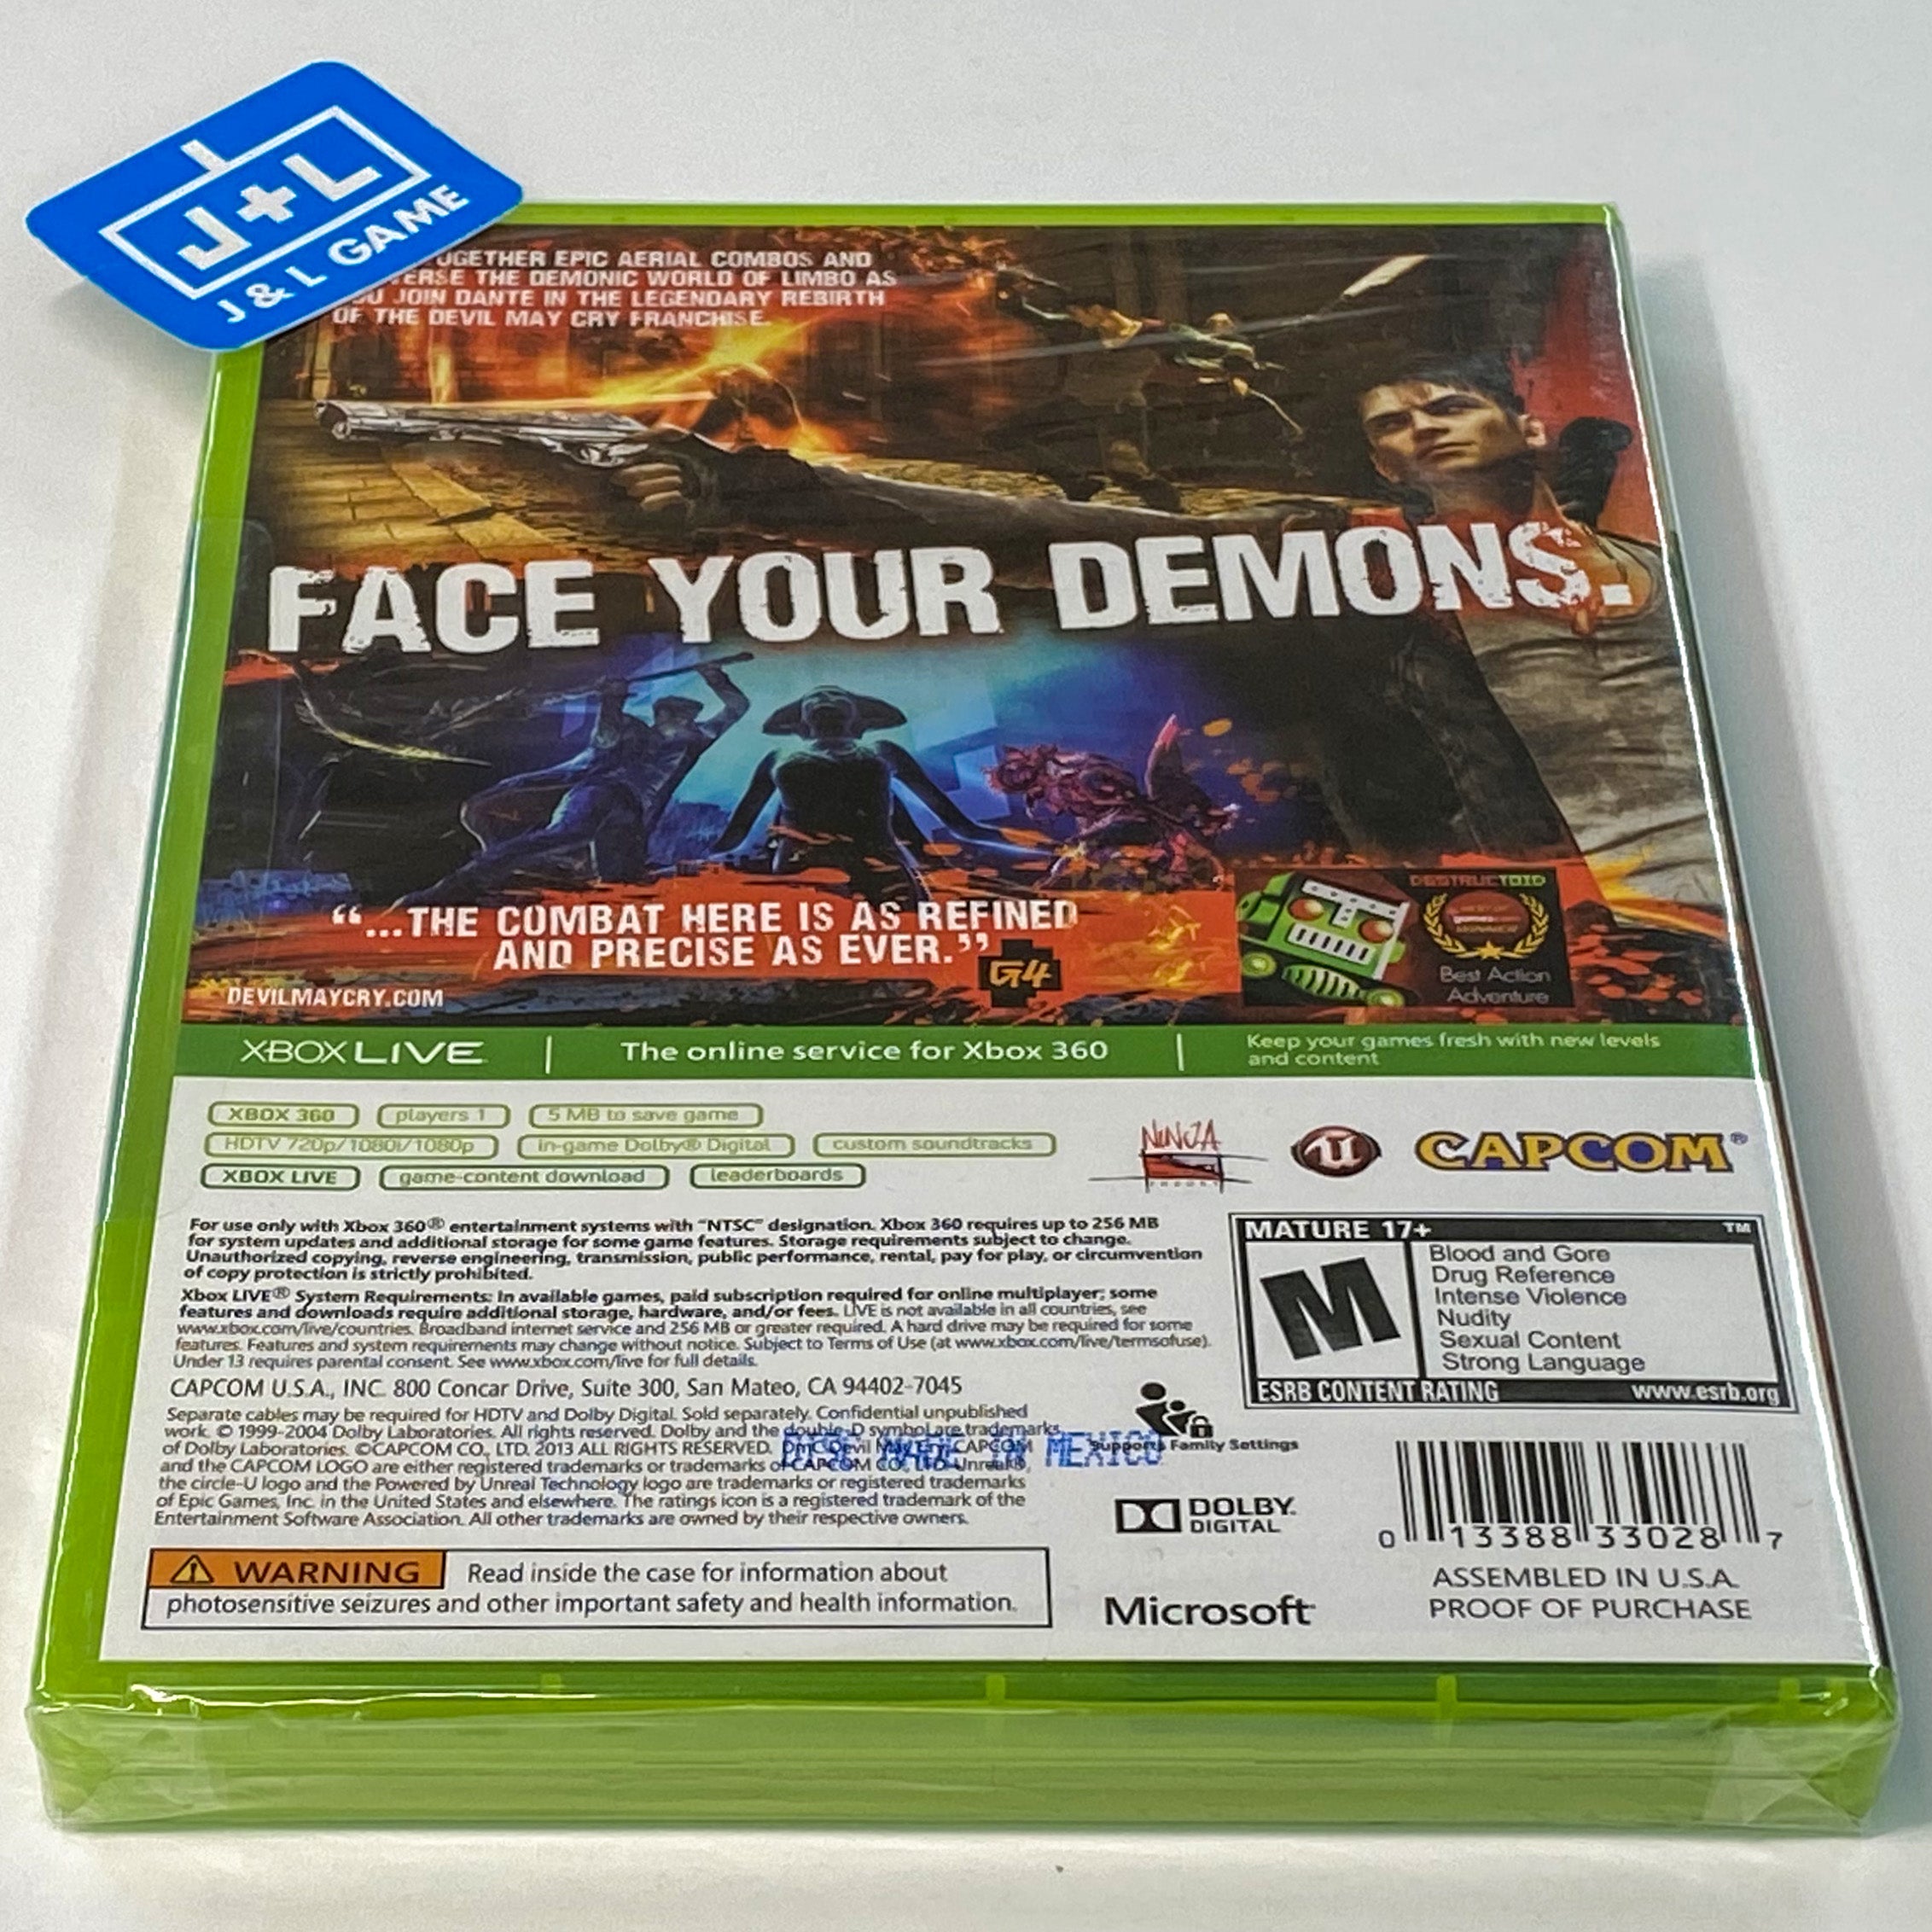 DMC: Devil May Cry - Xbox 360 Video Games Capcom   